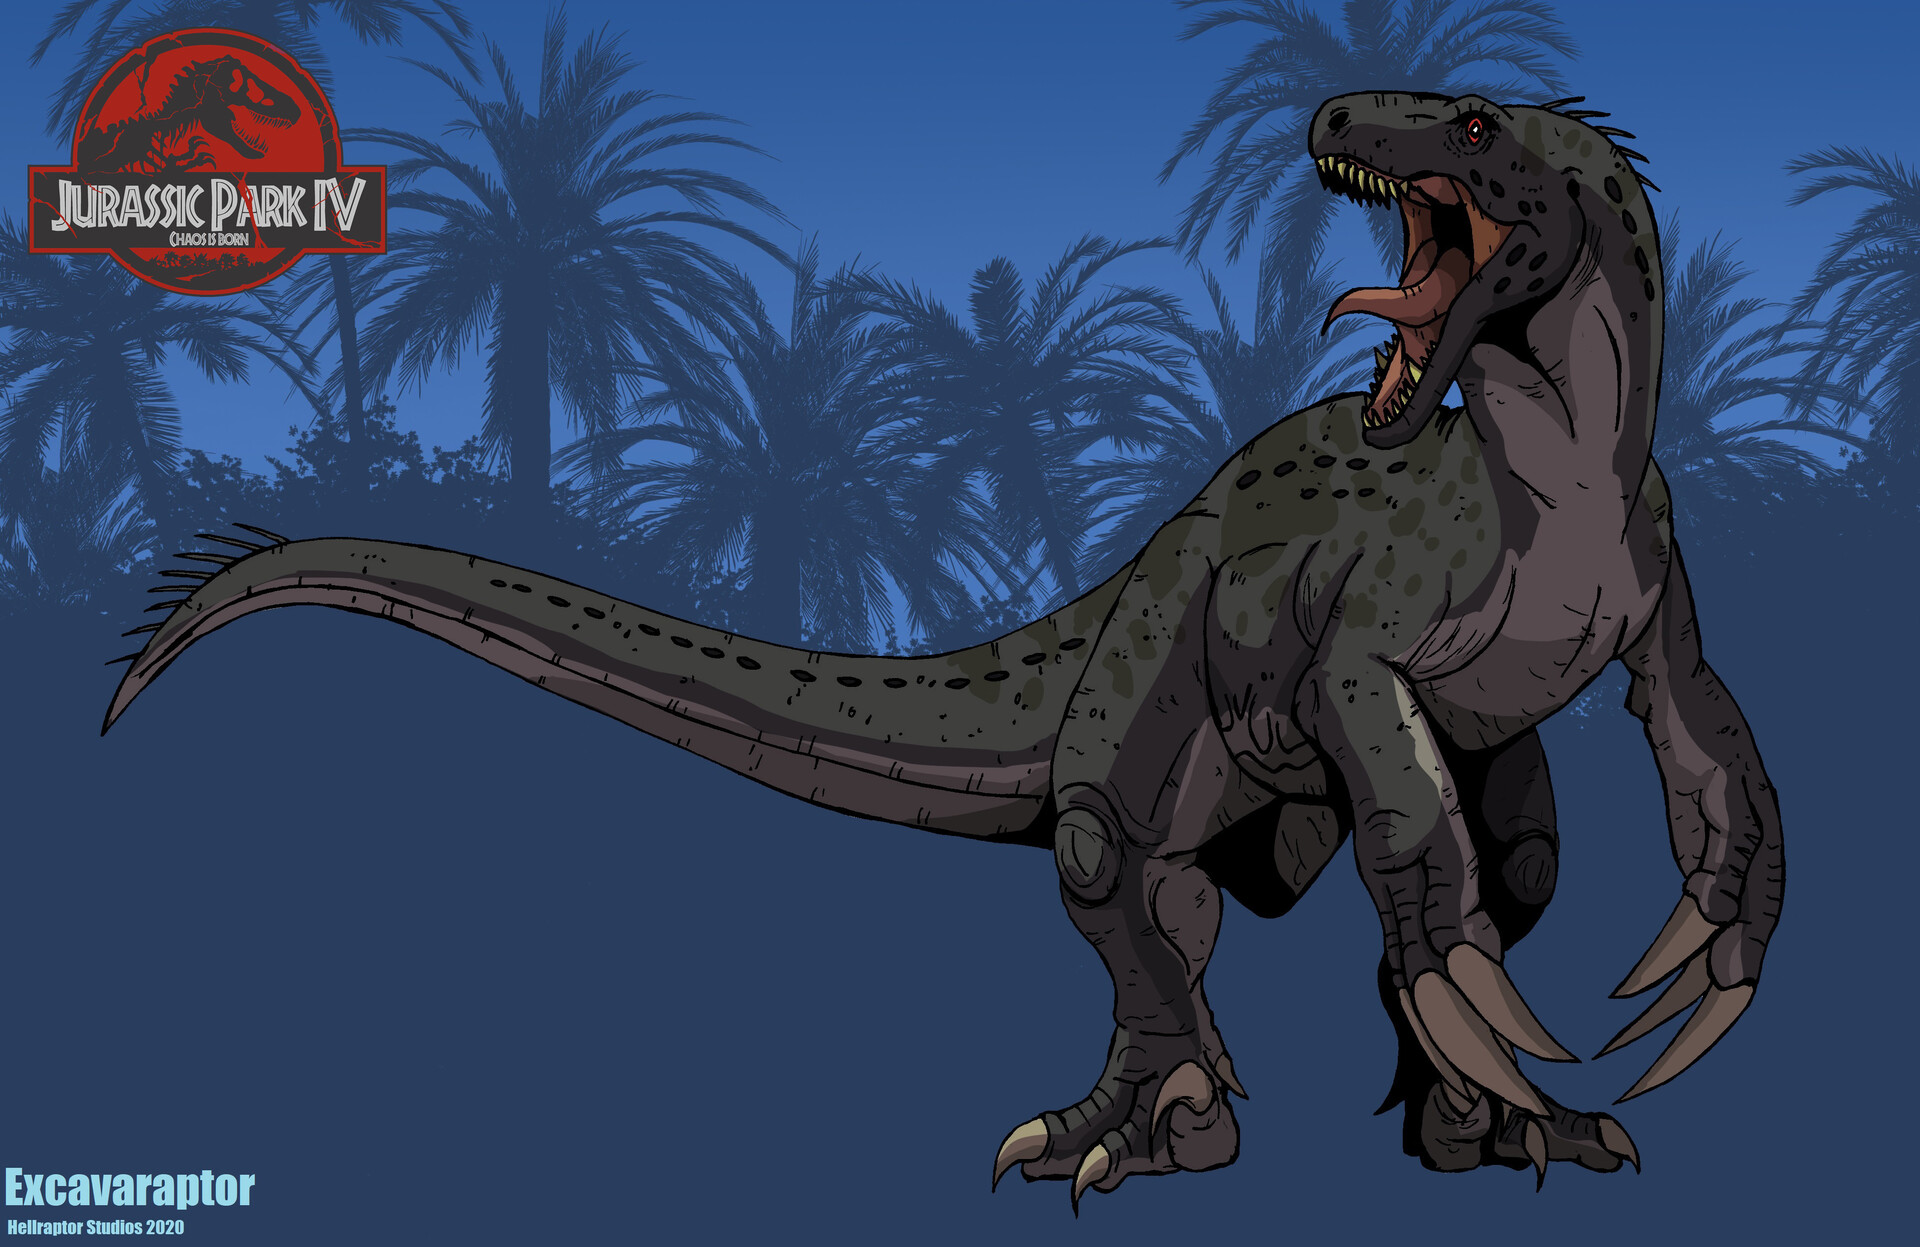 ArtStation - Jurassic Park IV Concepts